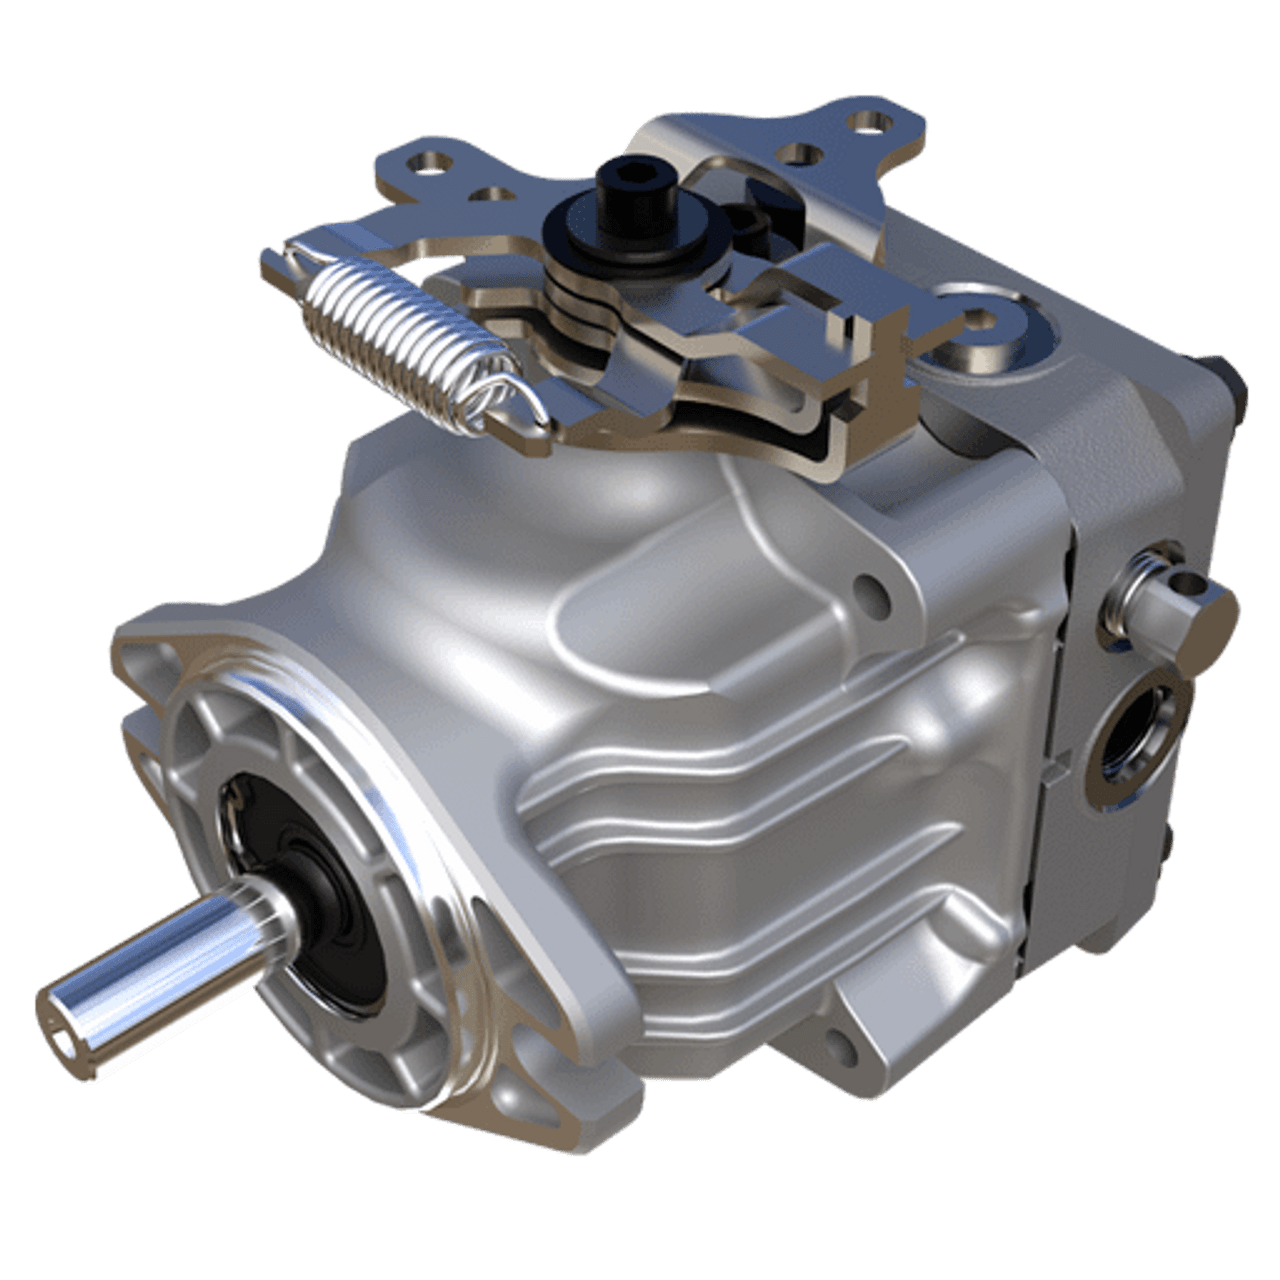 Hydro Gear PL-AAQQ-DY1X-XXXX Hydraulic Pump PR Series | Original OEM Part | Free Shipping - LawnMowerPartsWorld.com